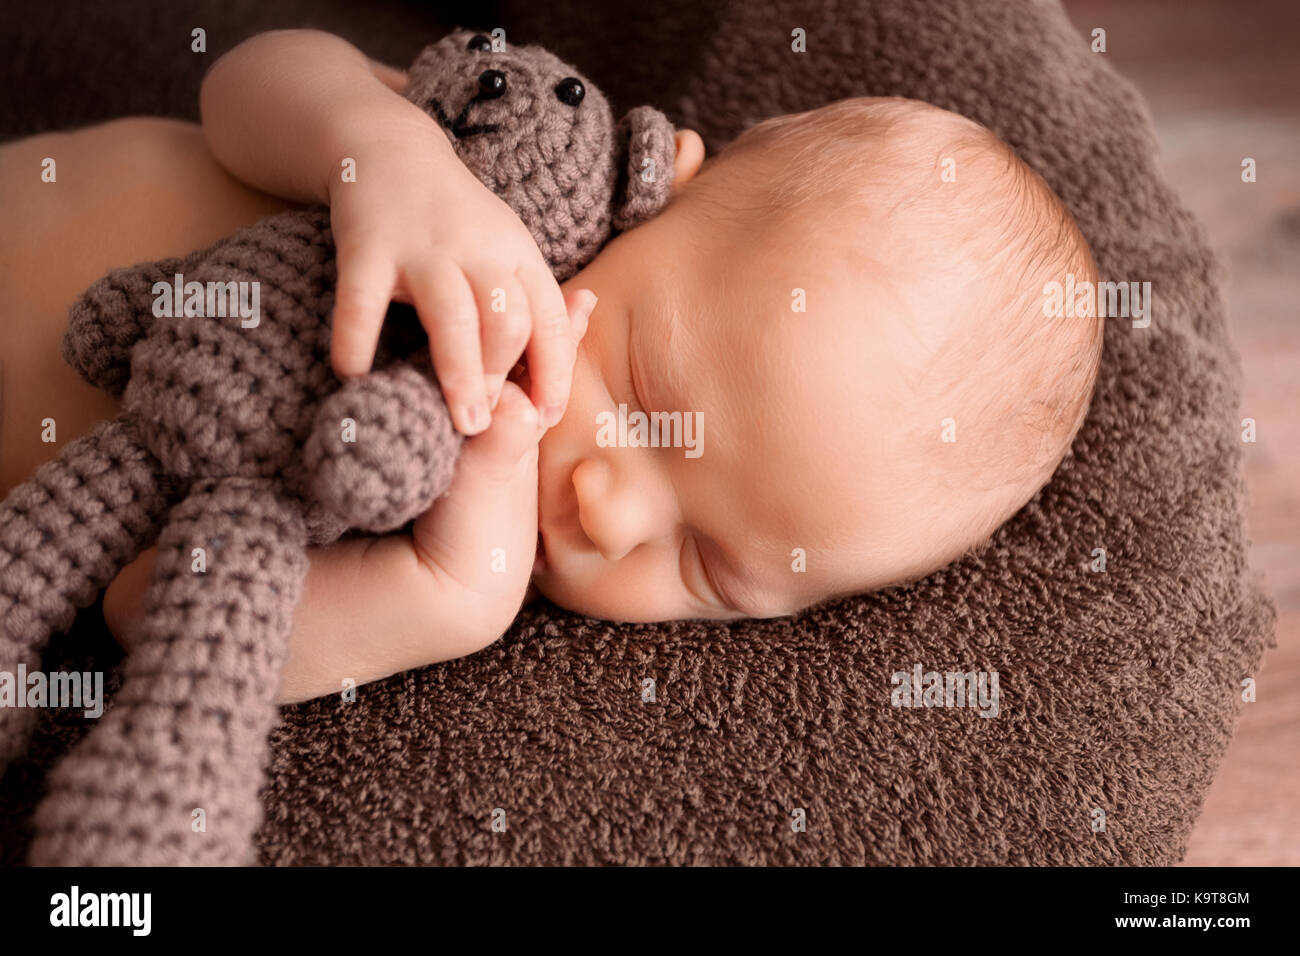 Newborn Posing | Most Popular Newborn Photography Poses